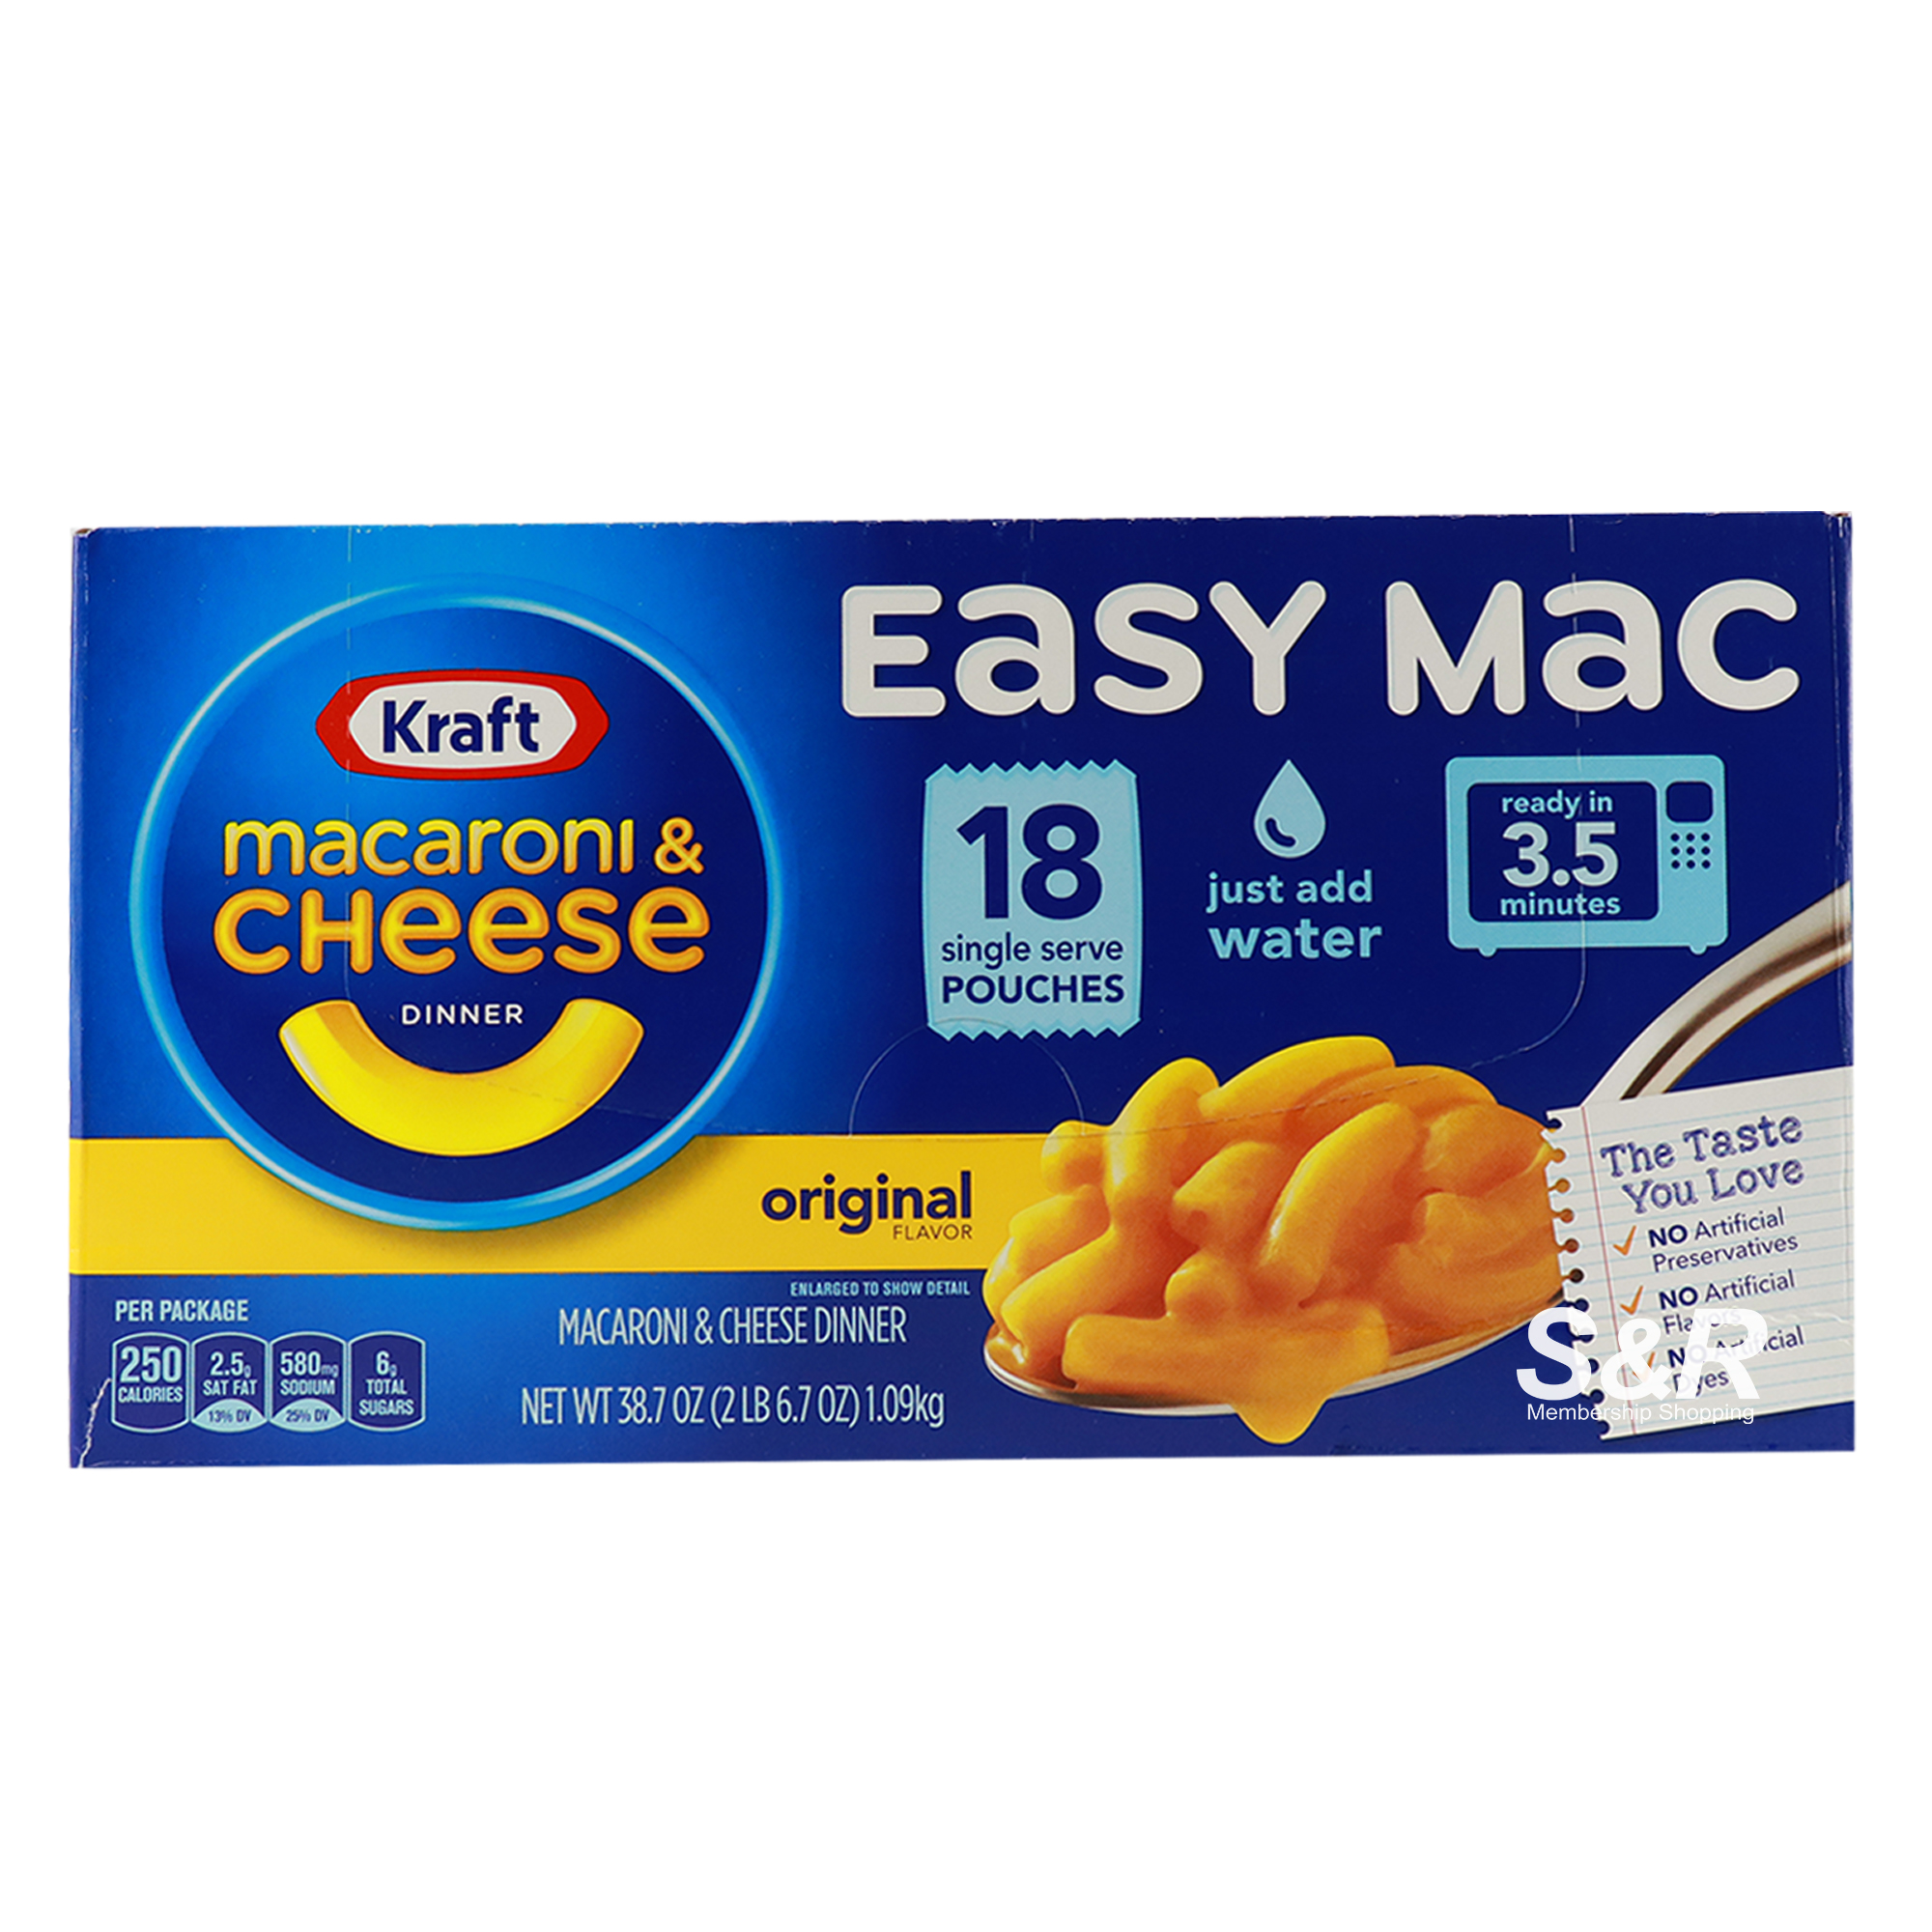 Kraft Macaroni and Cheese Dinner Easy Mac Original 18pcs